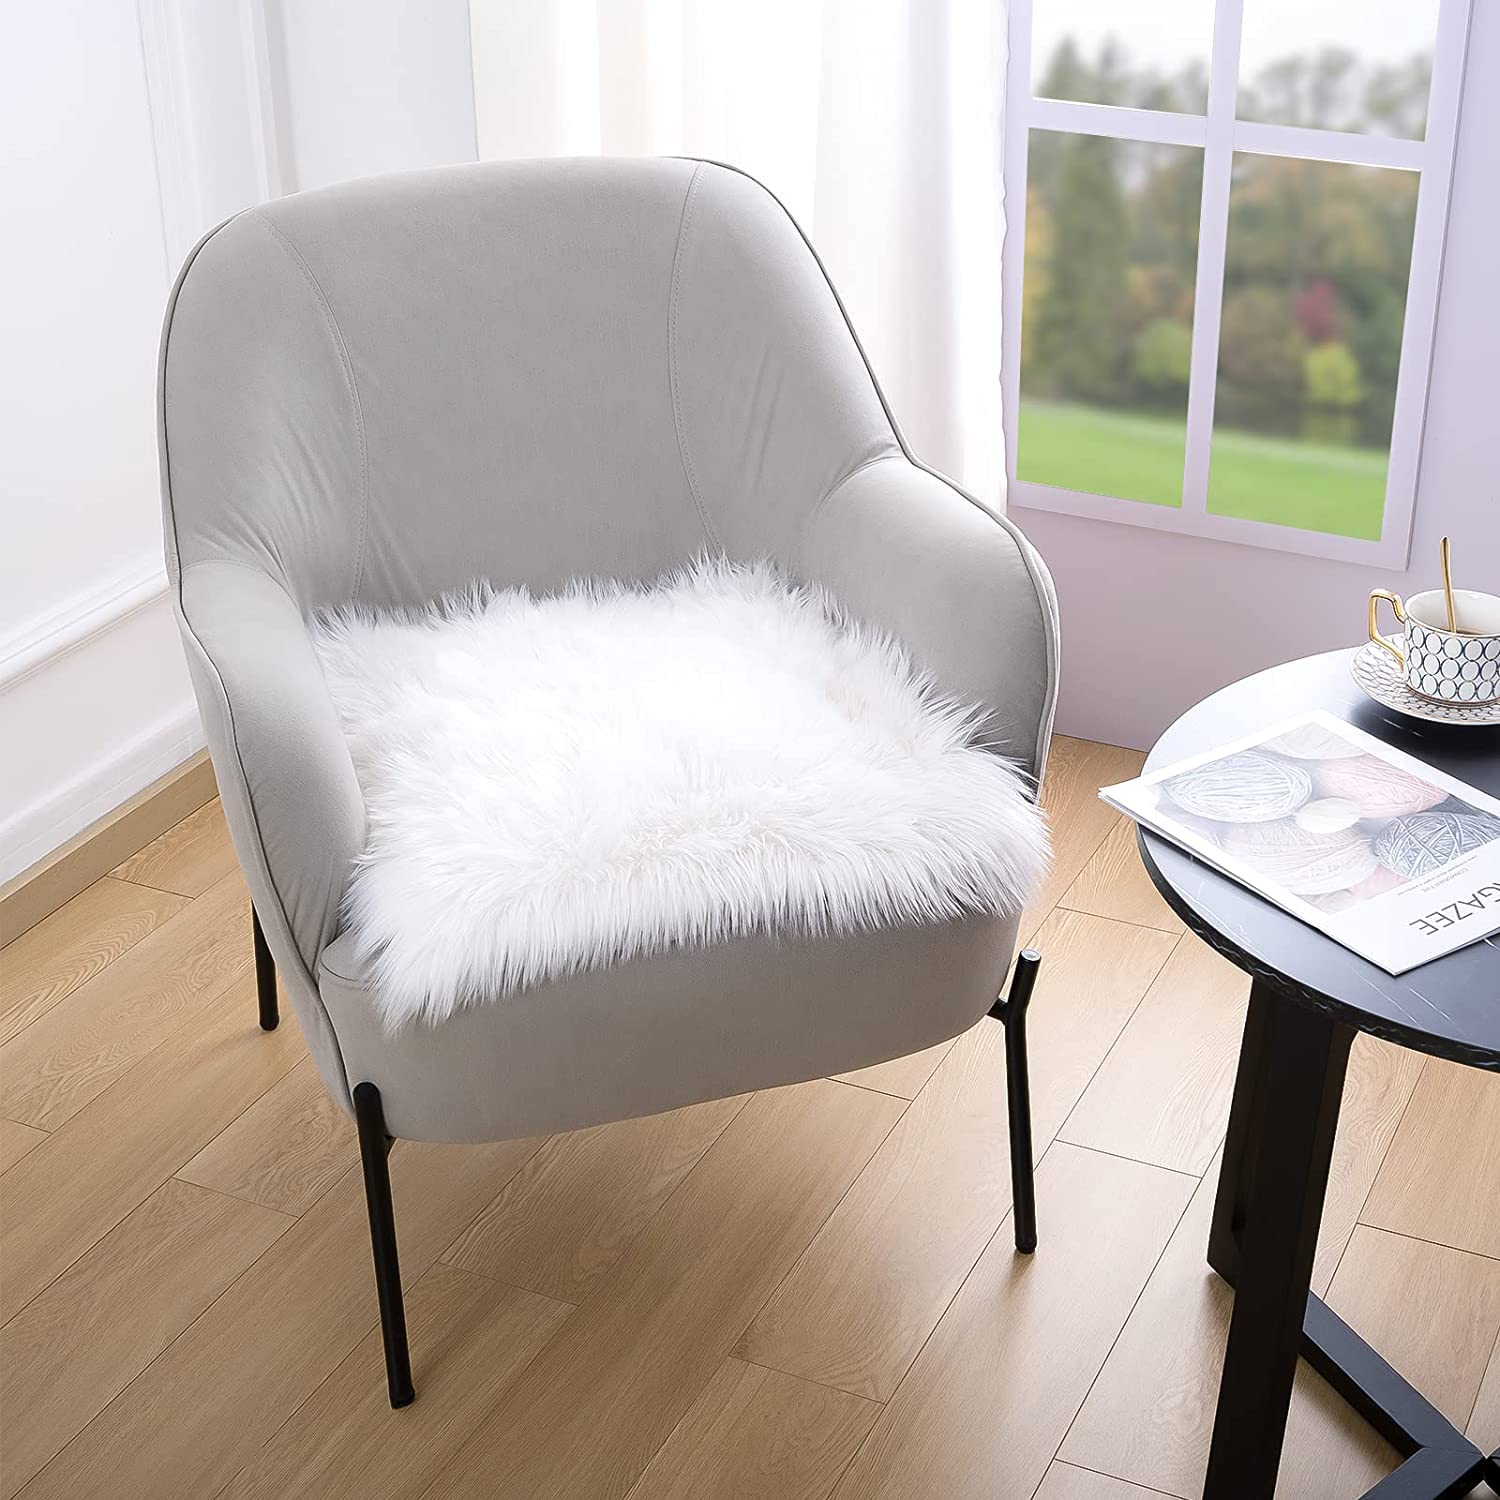 Floor Mats Luxury 1 5 Feet Faux Fur Sheepskin Rugs Ultra Soft Fluffy Gkw Retail